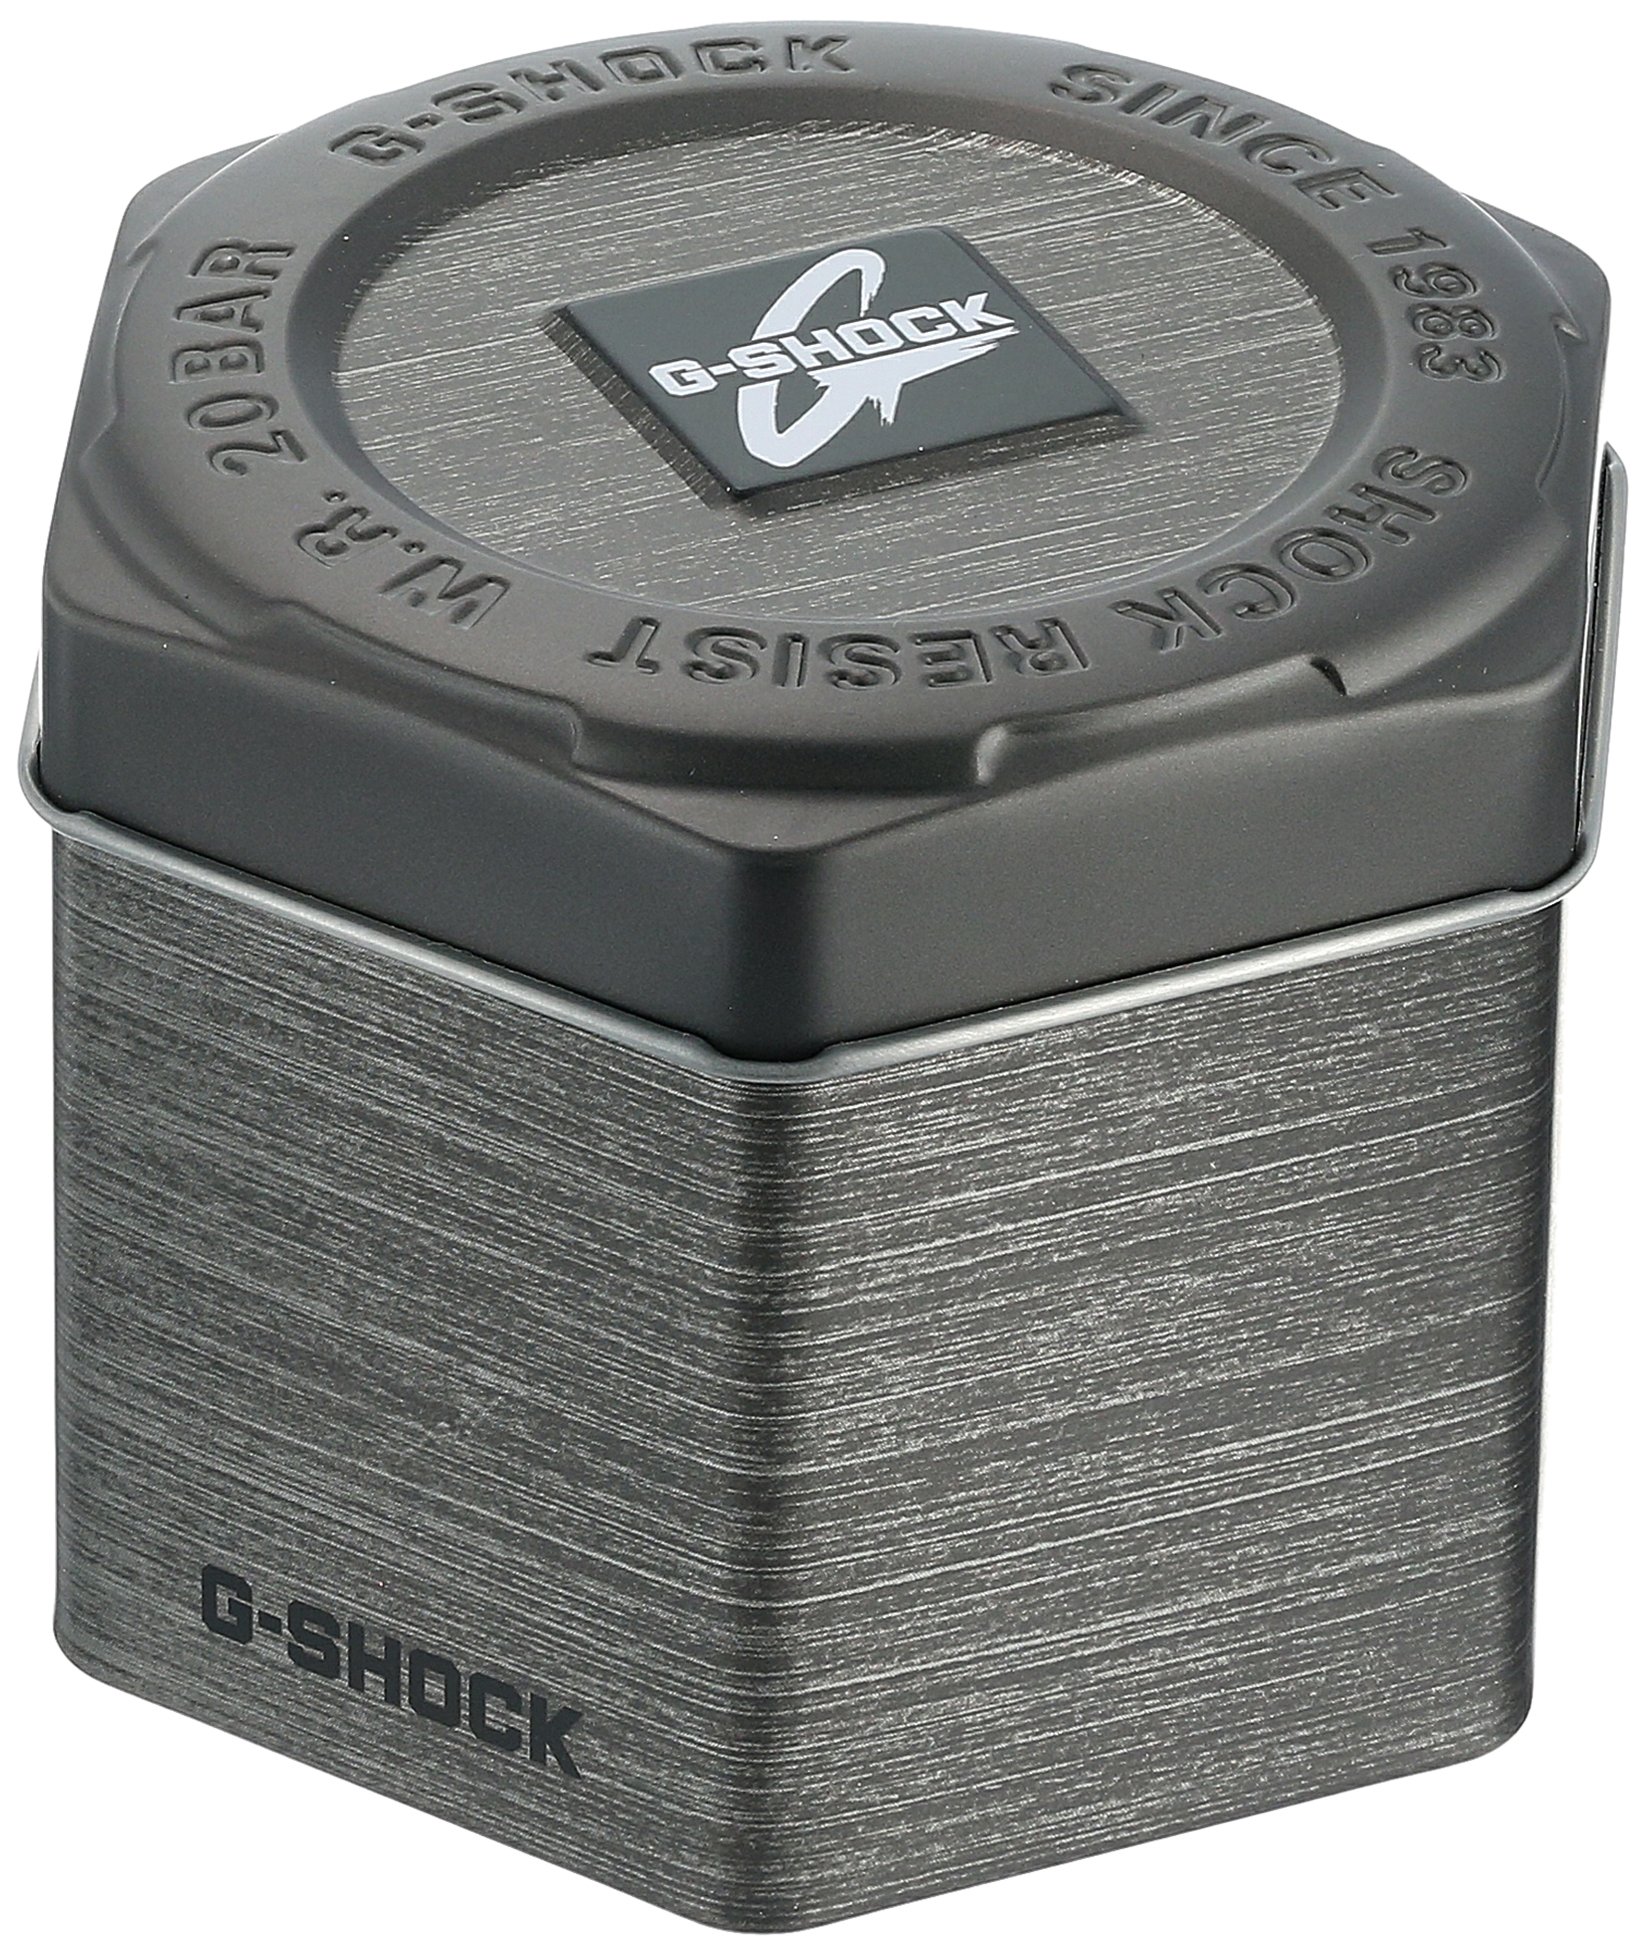 Casio Men's 'G-Steel by G-Shock' Quartz Solar Bluetooth Connected Resin Dress Watch, Color: Black (Model: GST-B100-1ACR)